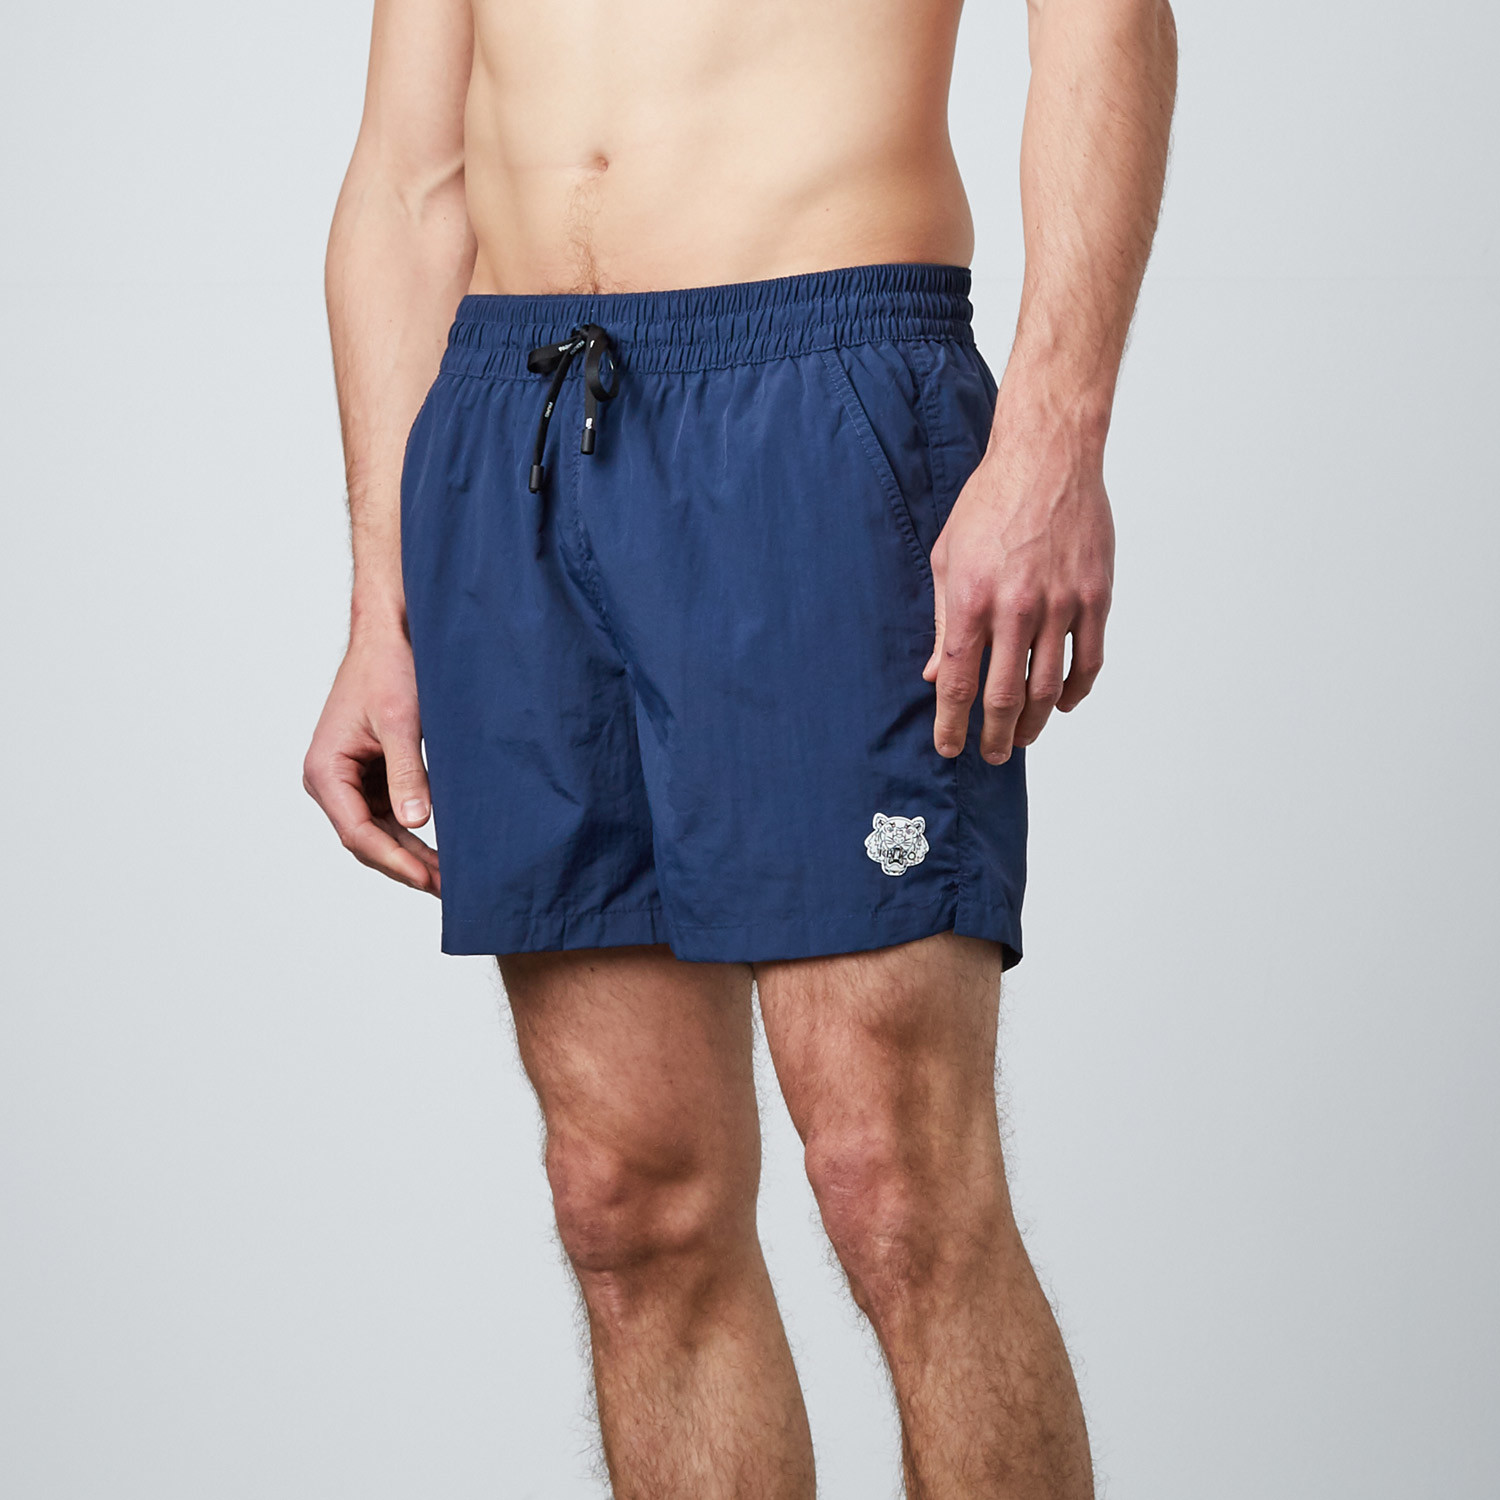 kenzo swimming shorts